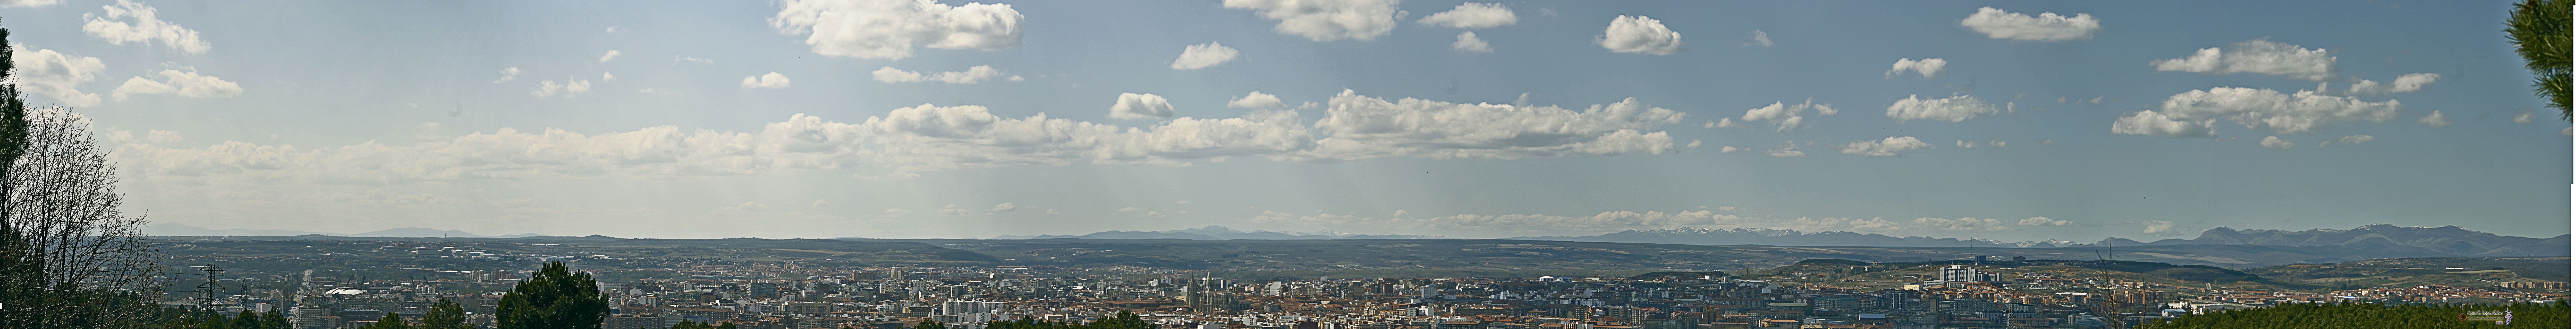 Panoramica de Leon desde La Candamia..jpg